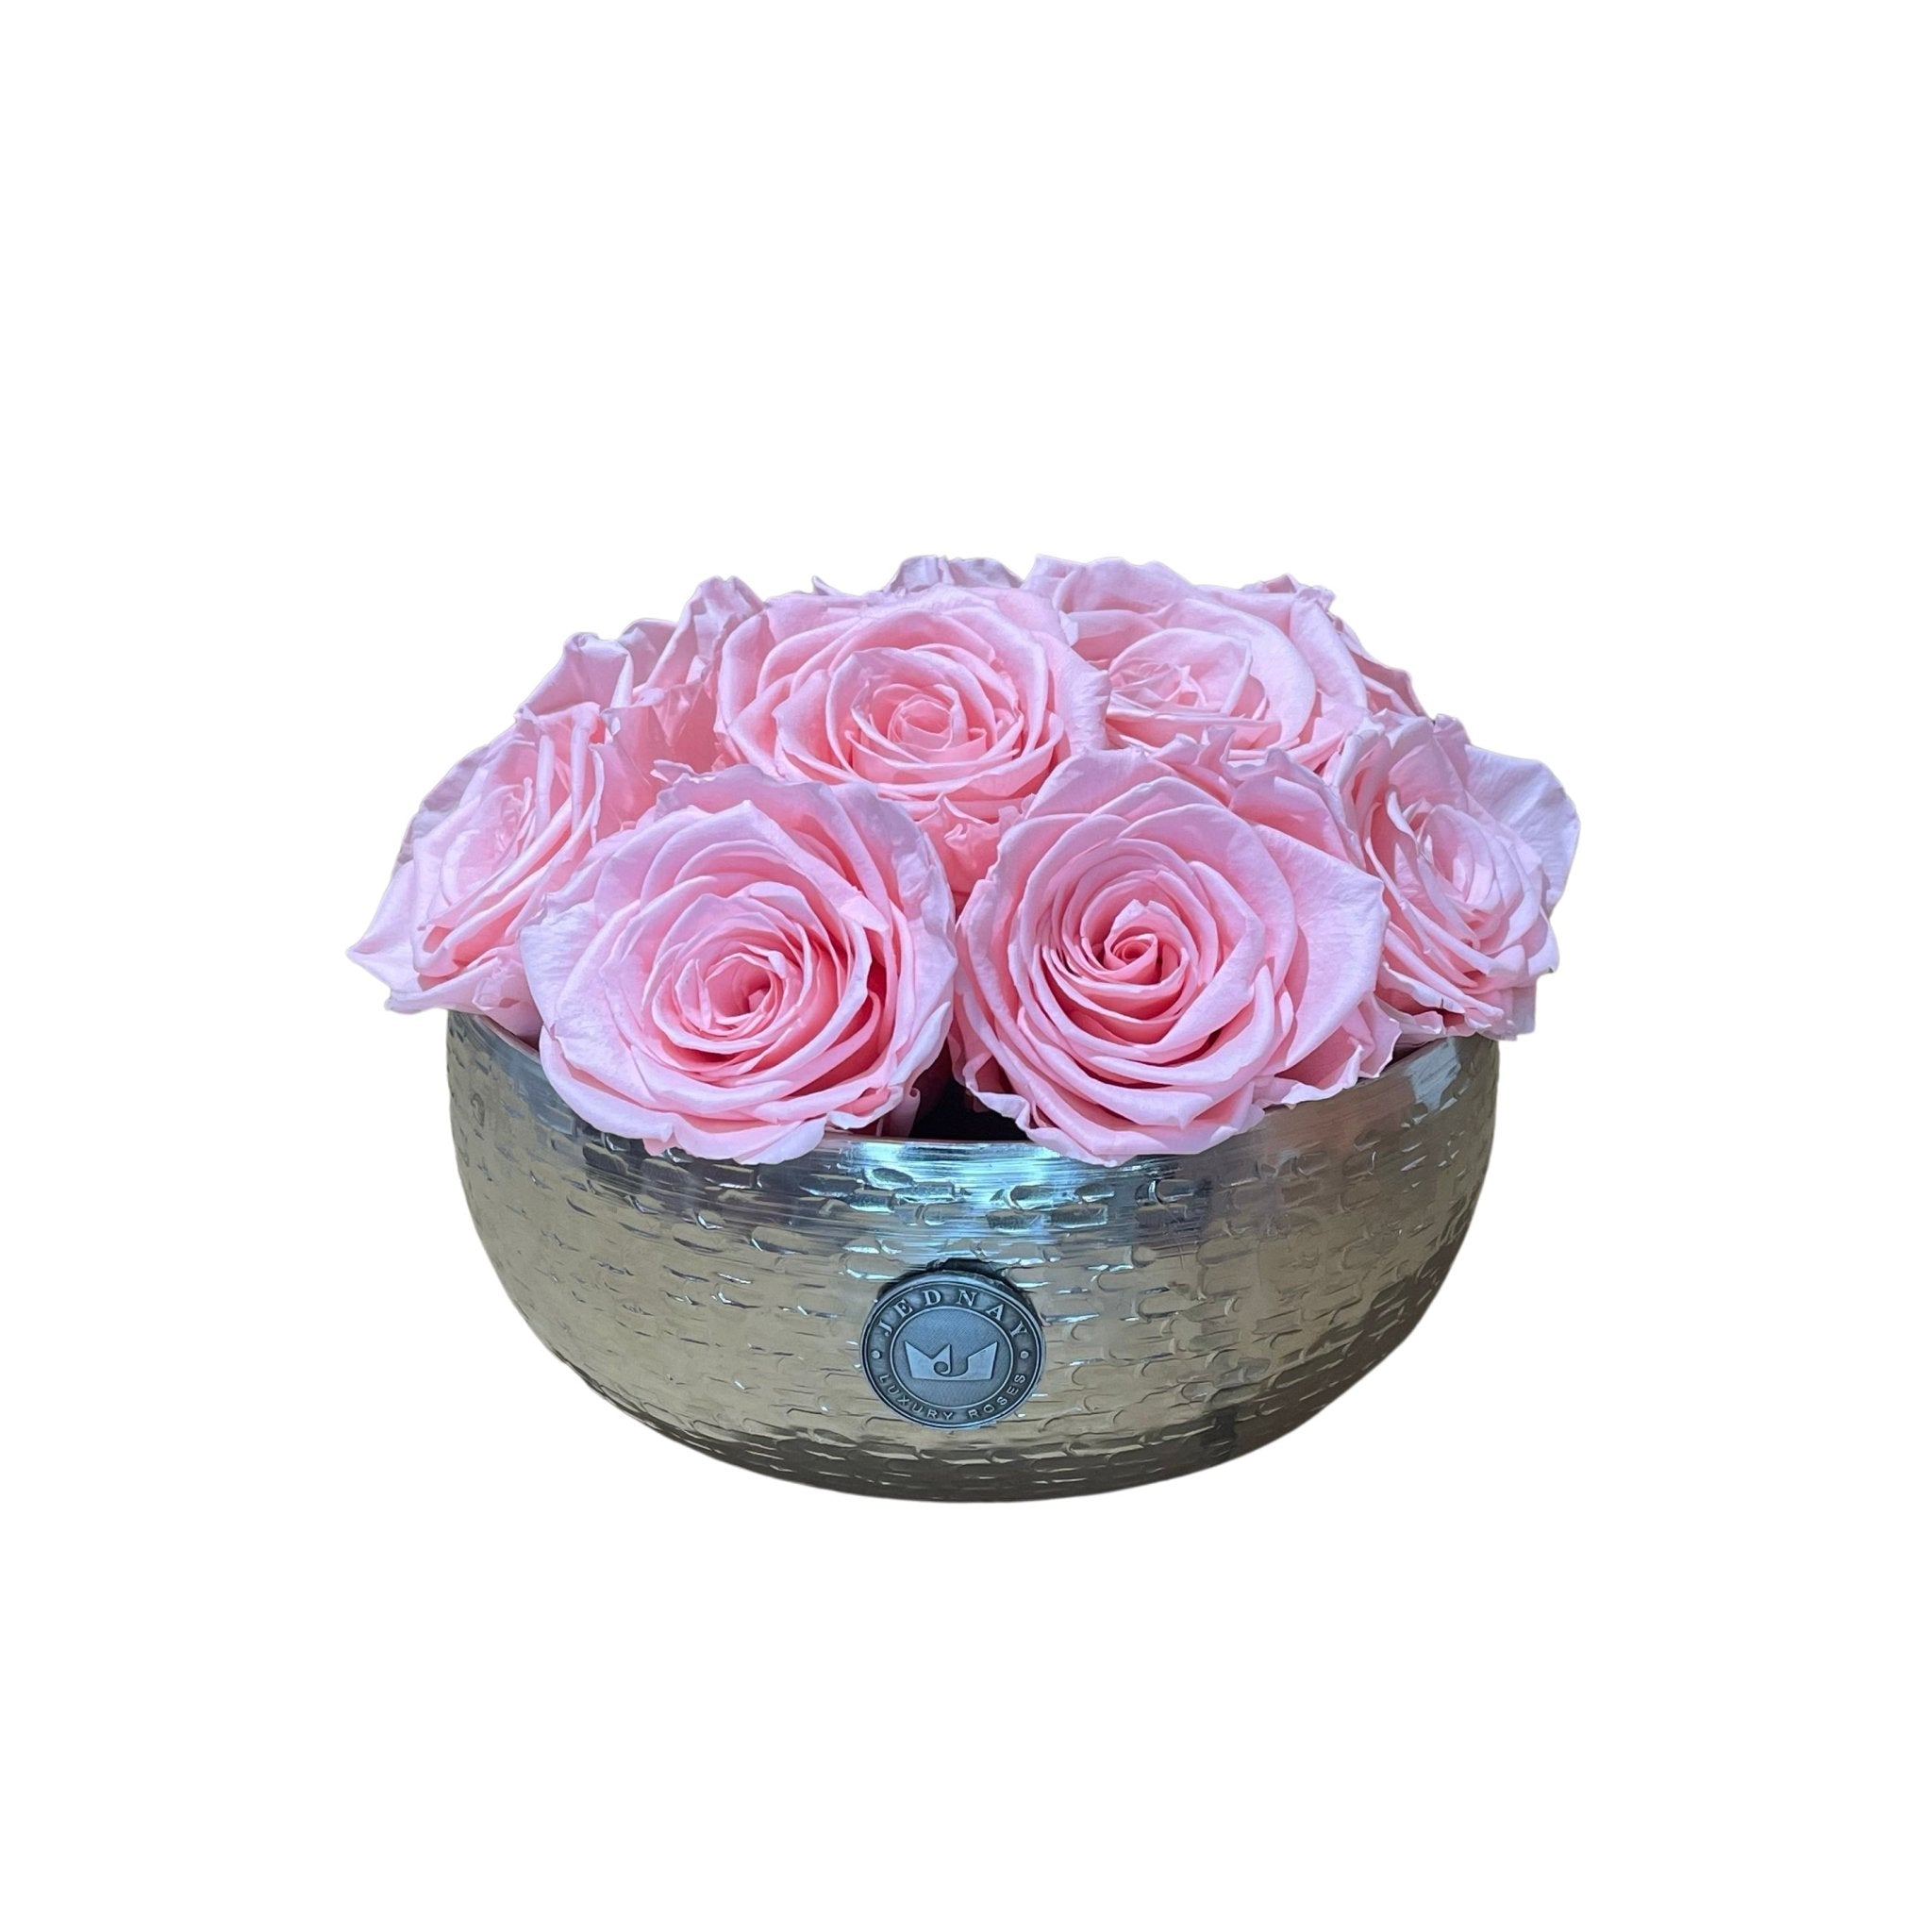 The Knightsbridge - Soft Pink Forever Roses - Chrome Bowl - Jednay Roses